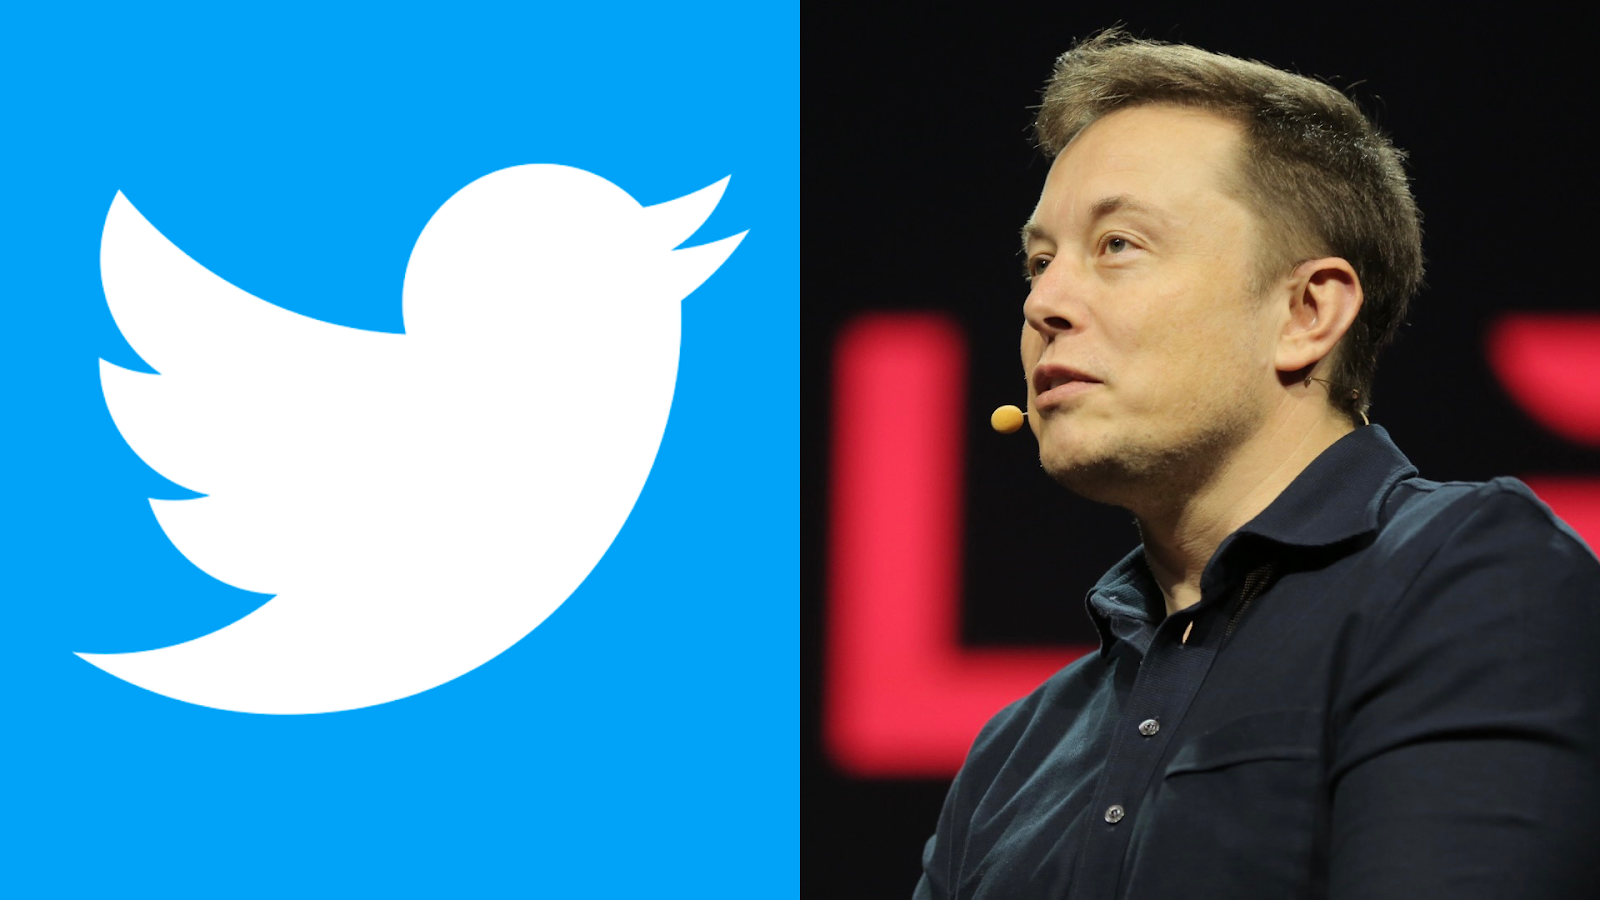 Elon Musk. TWITTER AND ITS MASS LAYOFF